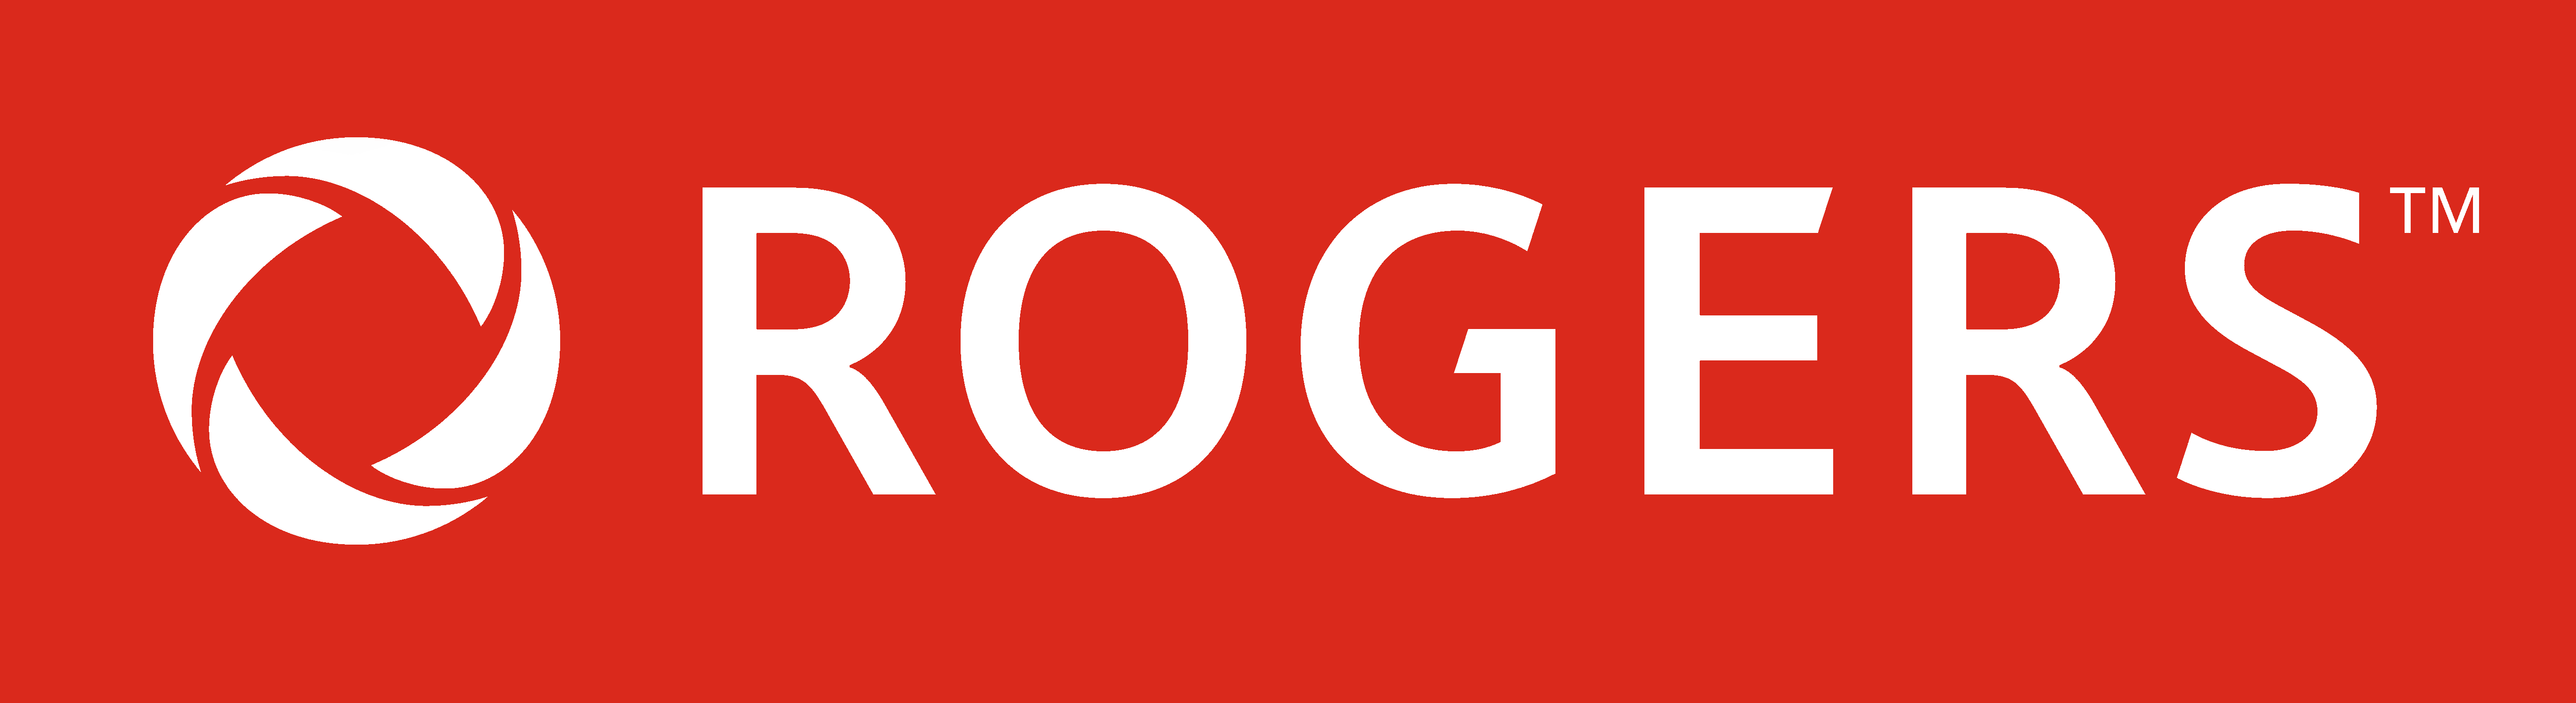 rogers logotype, red bg